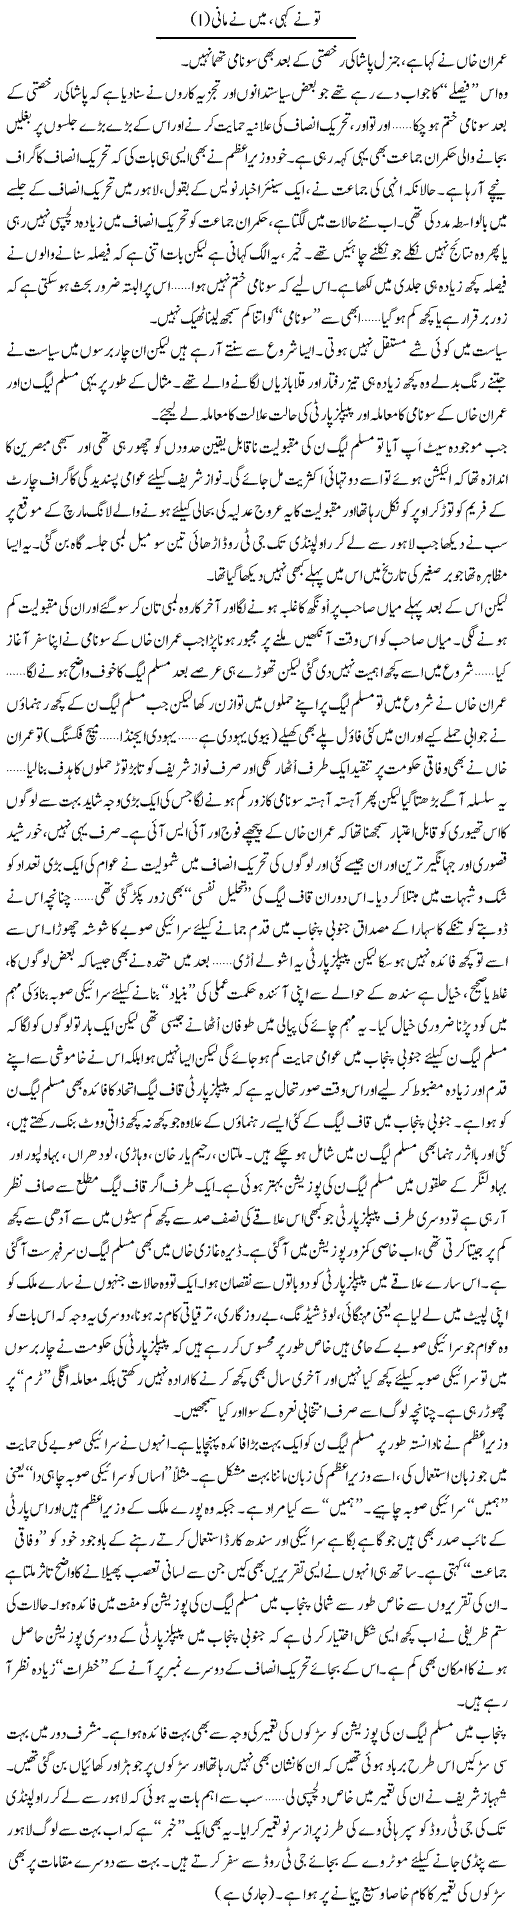 Tsunami of Imran Khan Express Column Abdullah Tariq 23 March 2012